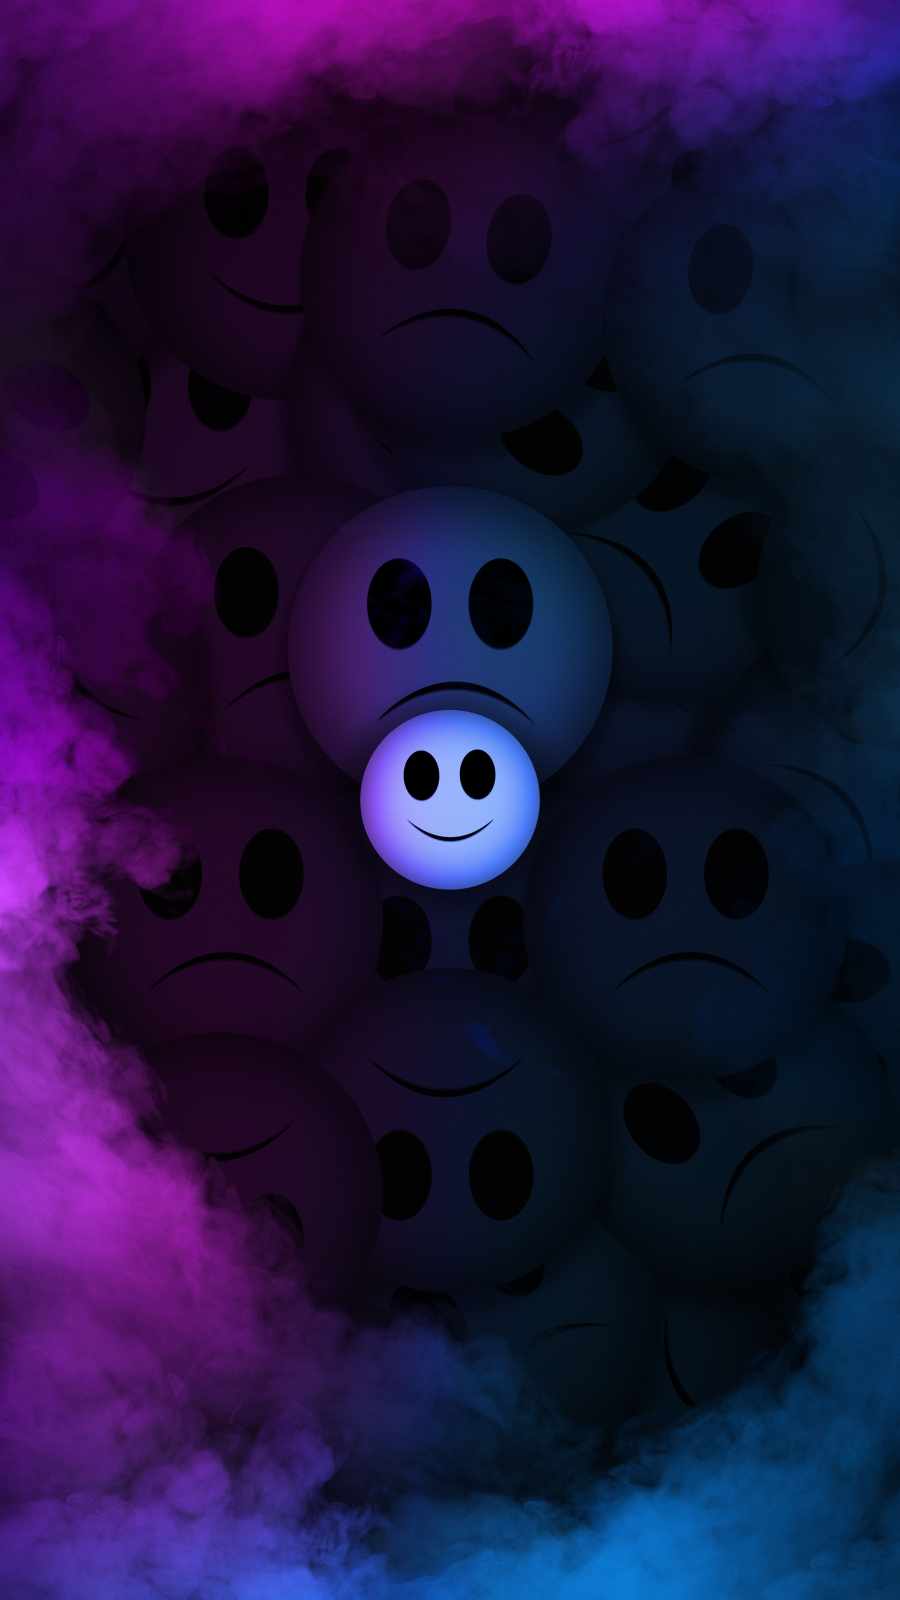 Sad Smile iPhone Wallpaper